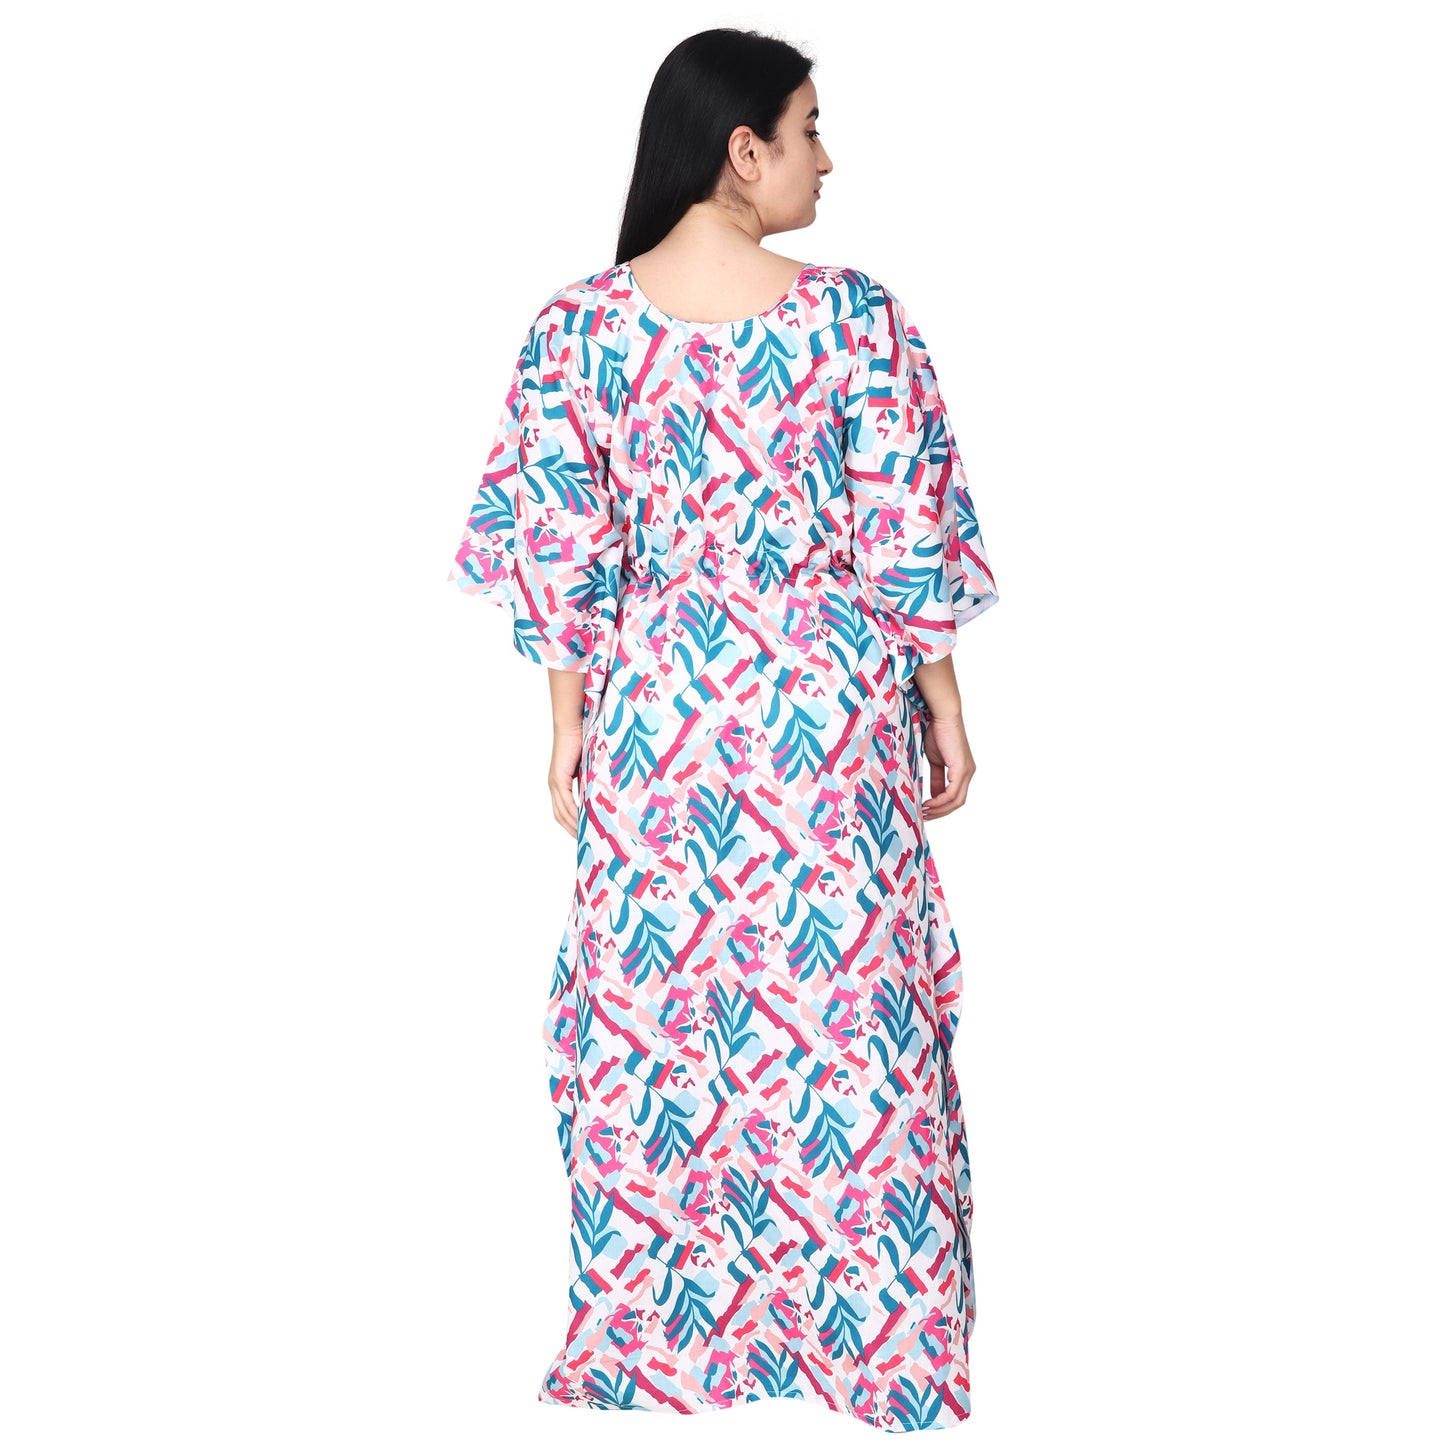 Printed Cotton Blend Kaftan Nighty For Women - Multi Colour